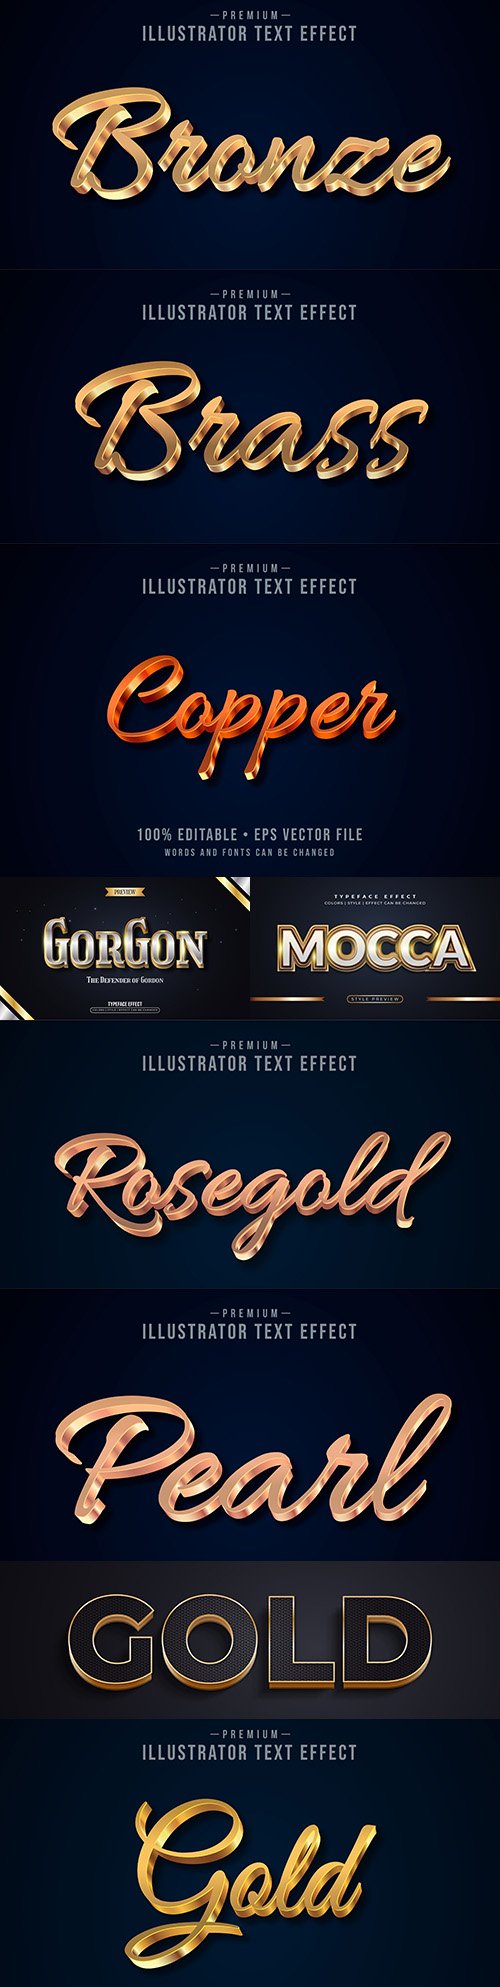 Editable font effect text collection illustration design 70